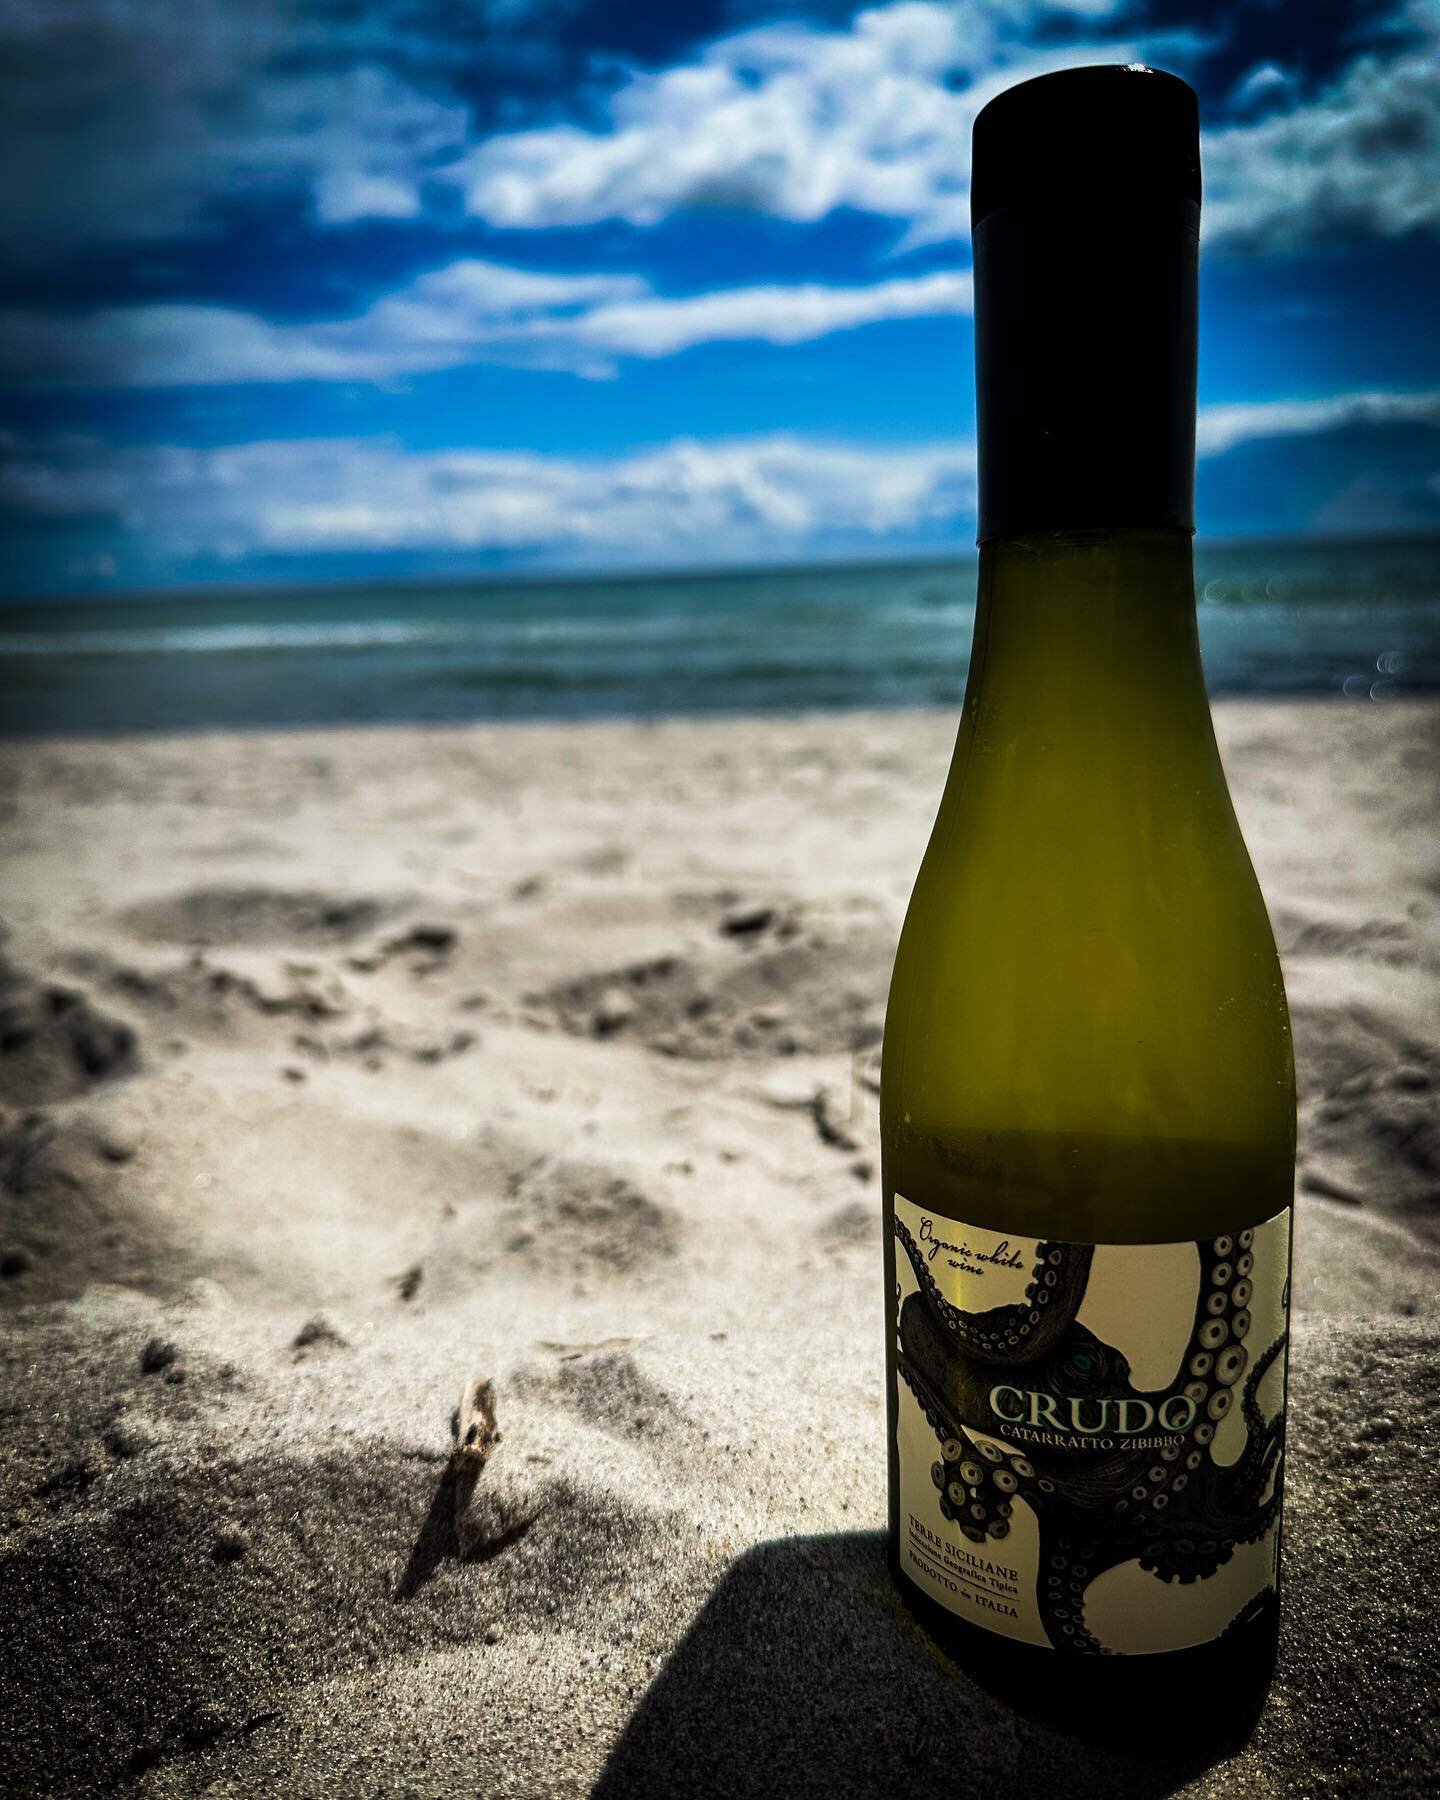 #wine #whitewine #recycle #beach #sweden